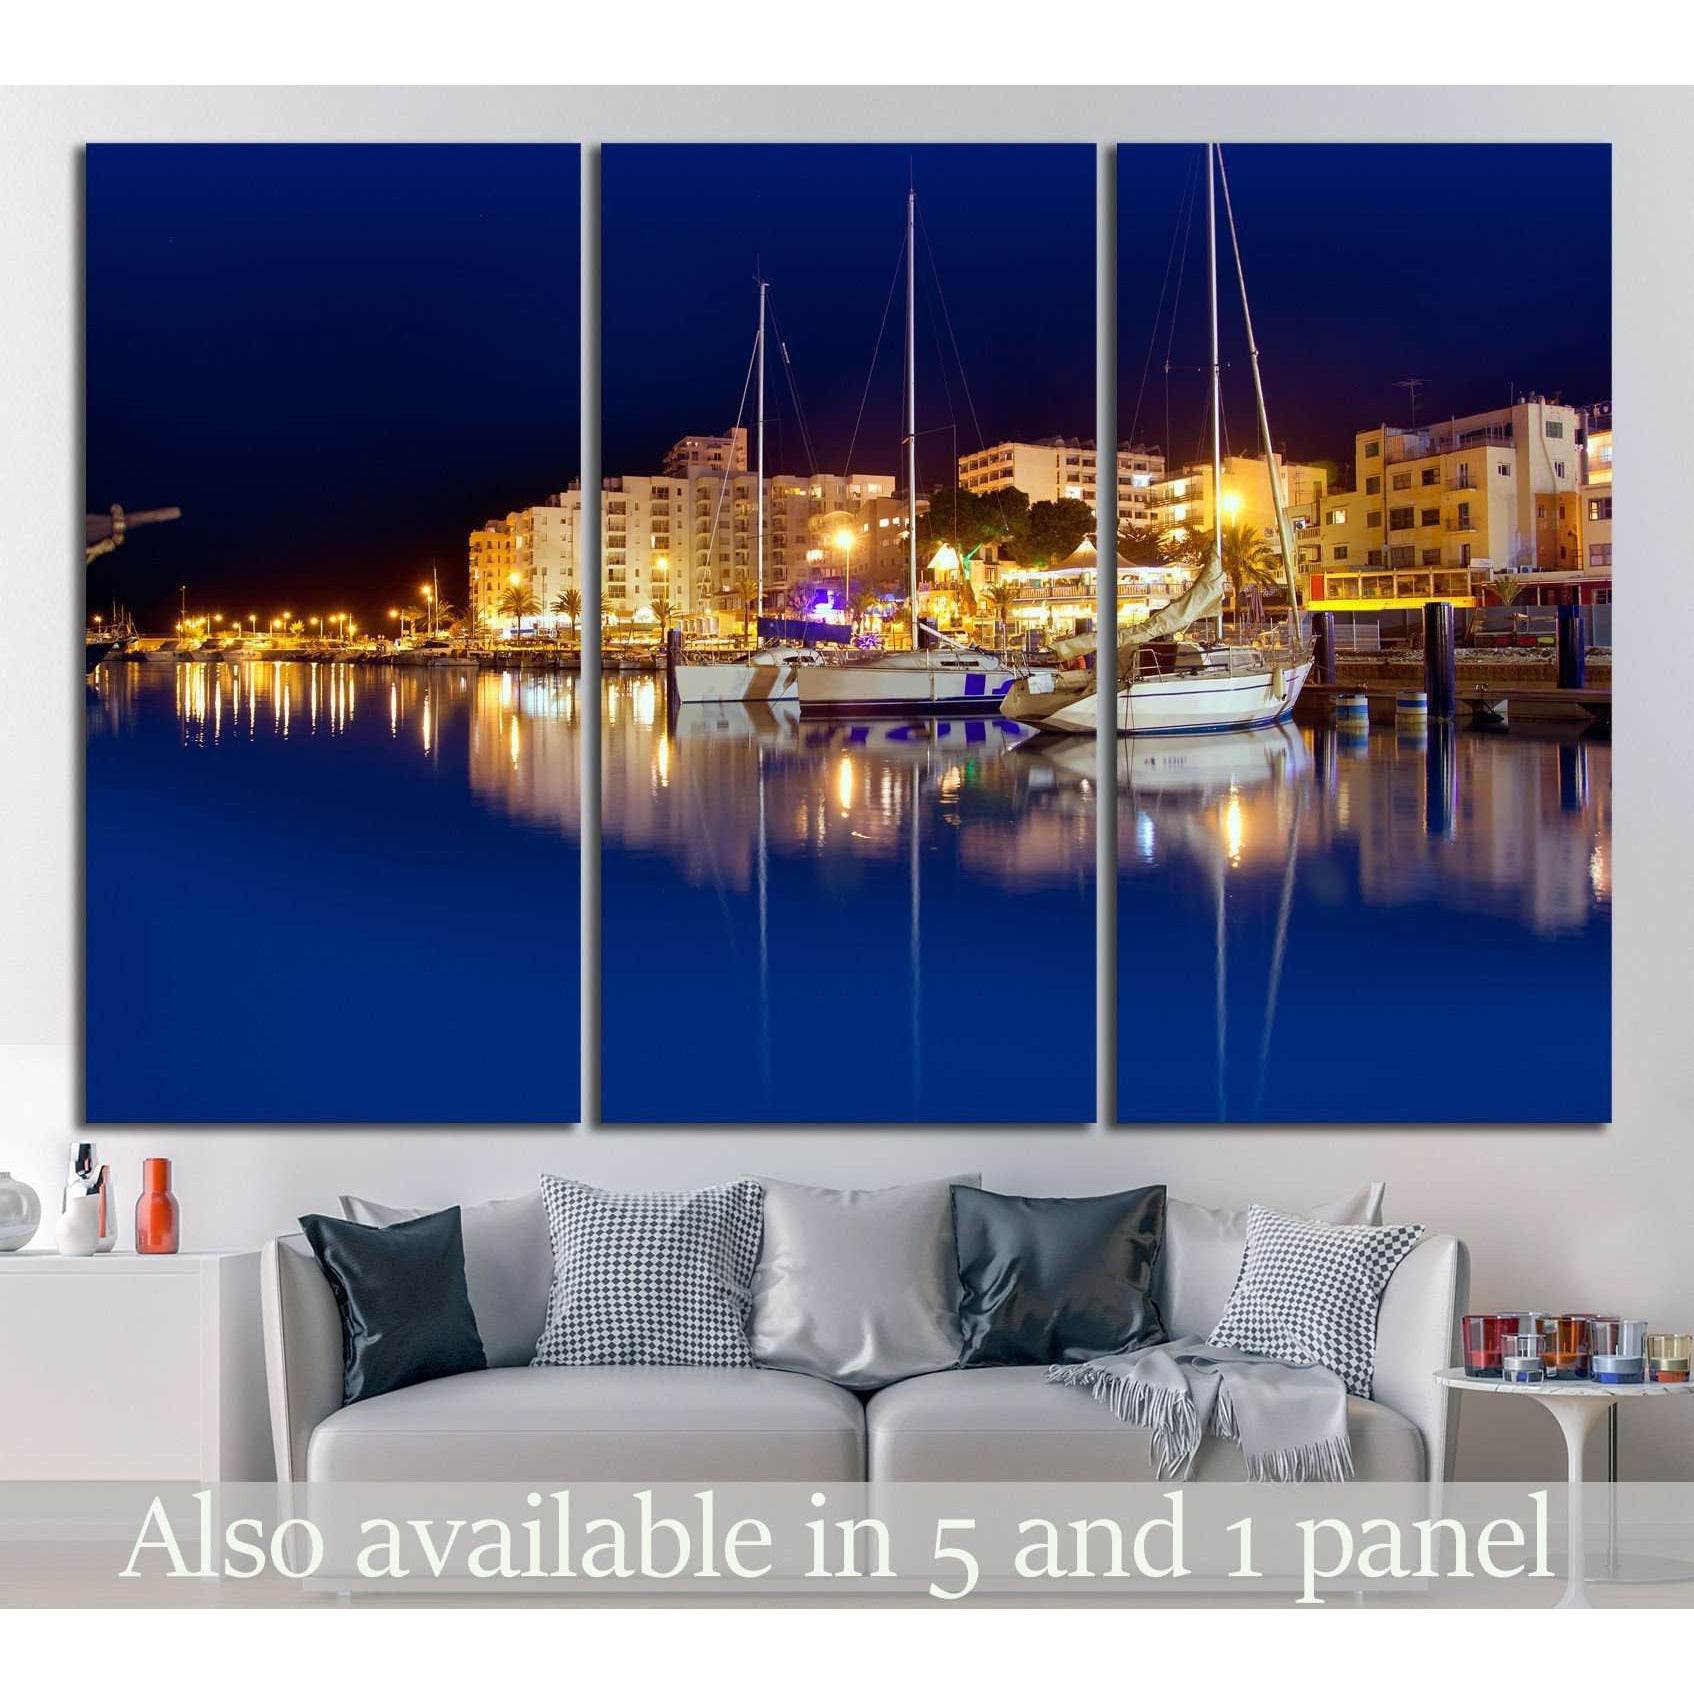 Ibiza island №997 Ready to Hang Canvas Print